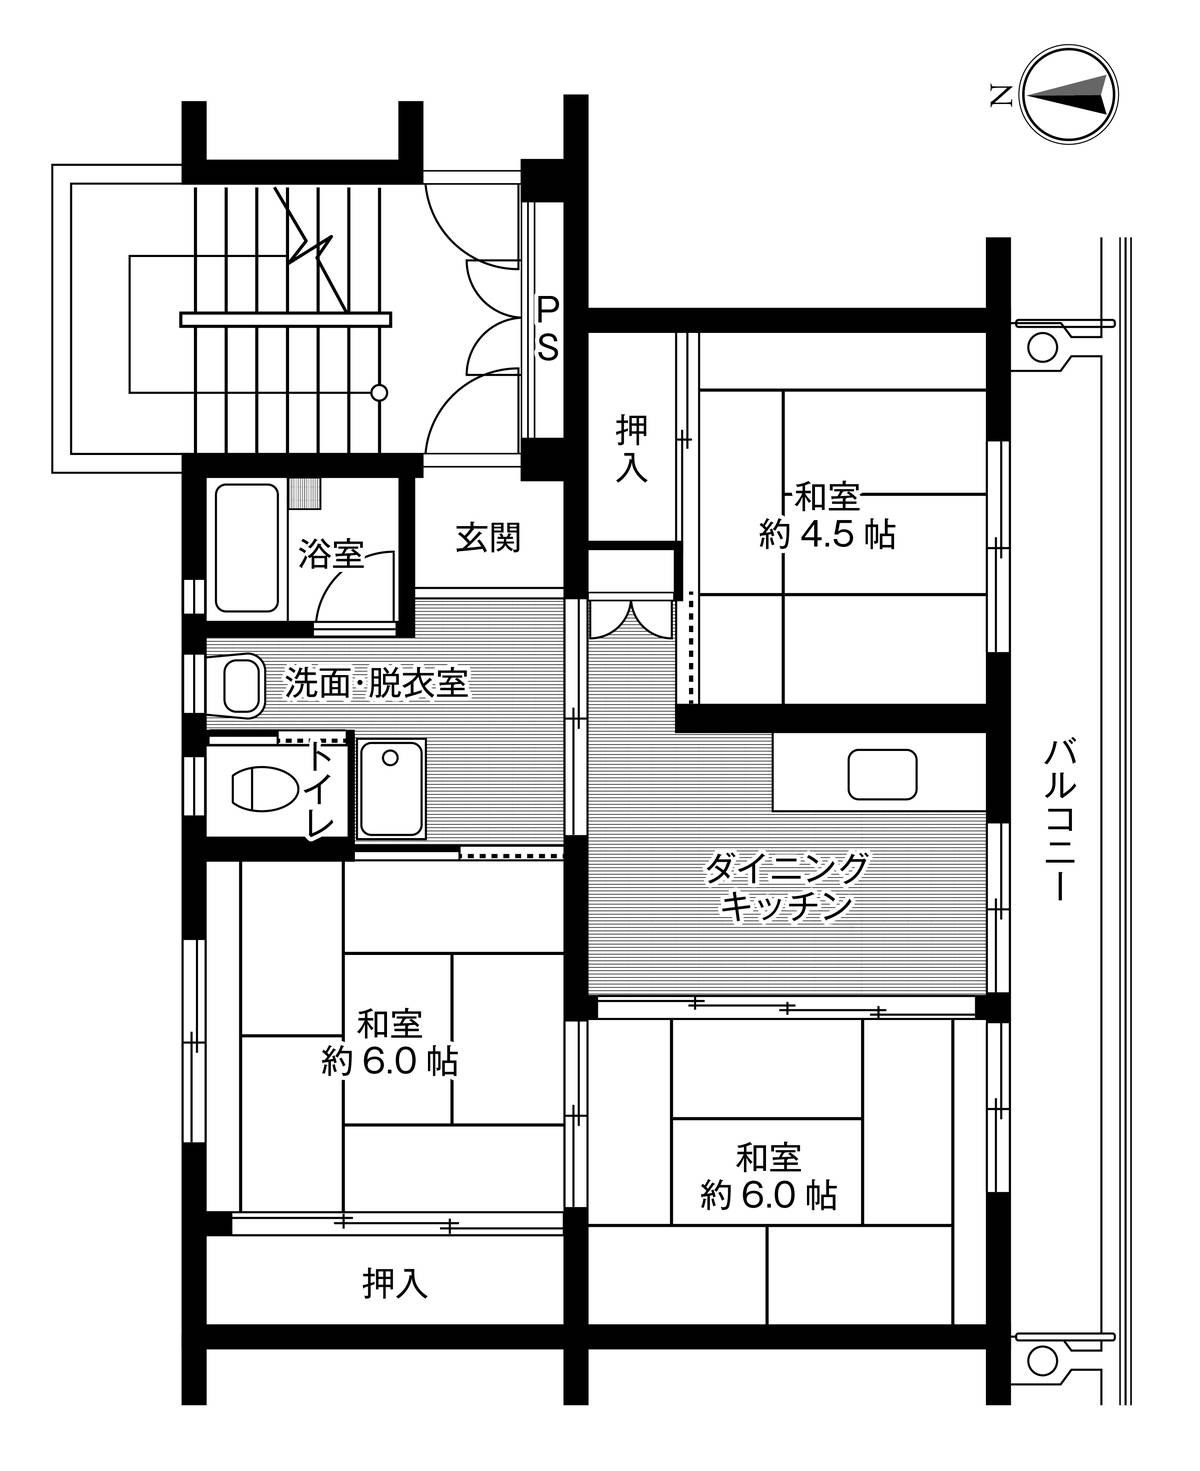 3DK floorplan of Village House Nishikichou in Sakata-shi